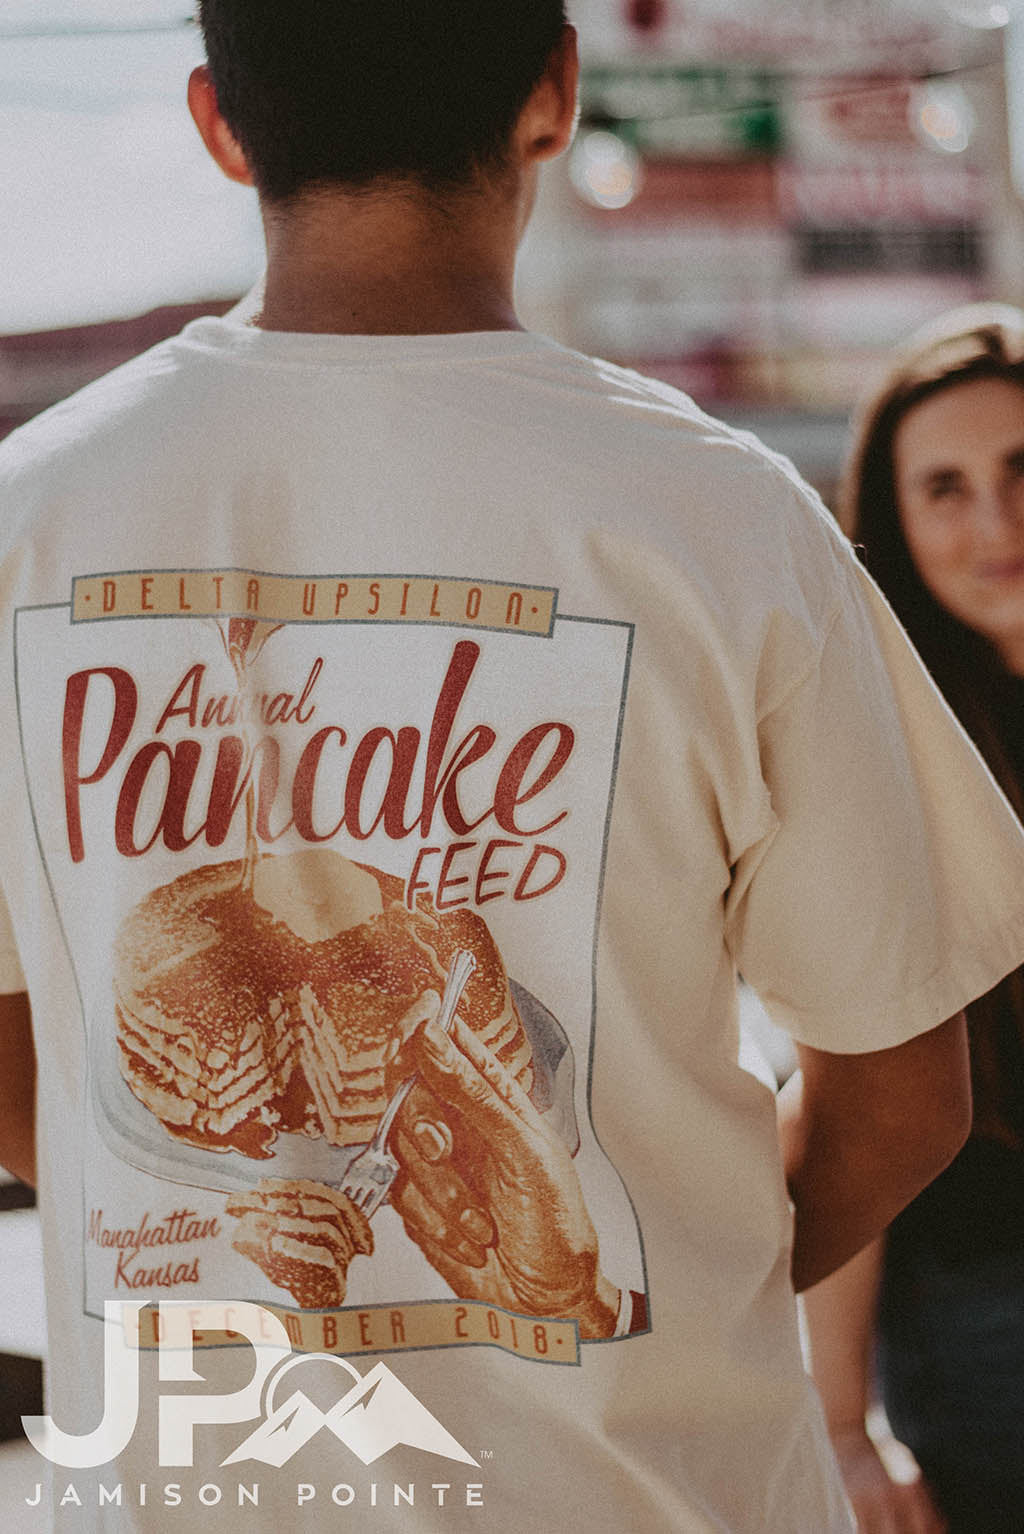 Delta Upsilon Philanthropy Pancake Feed Tee